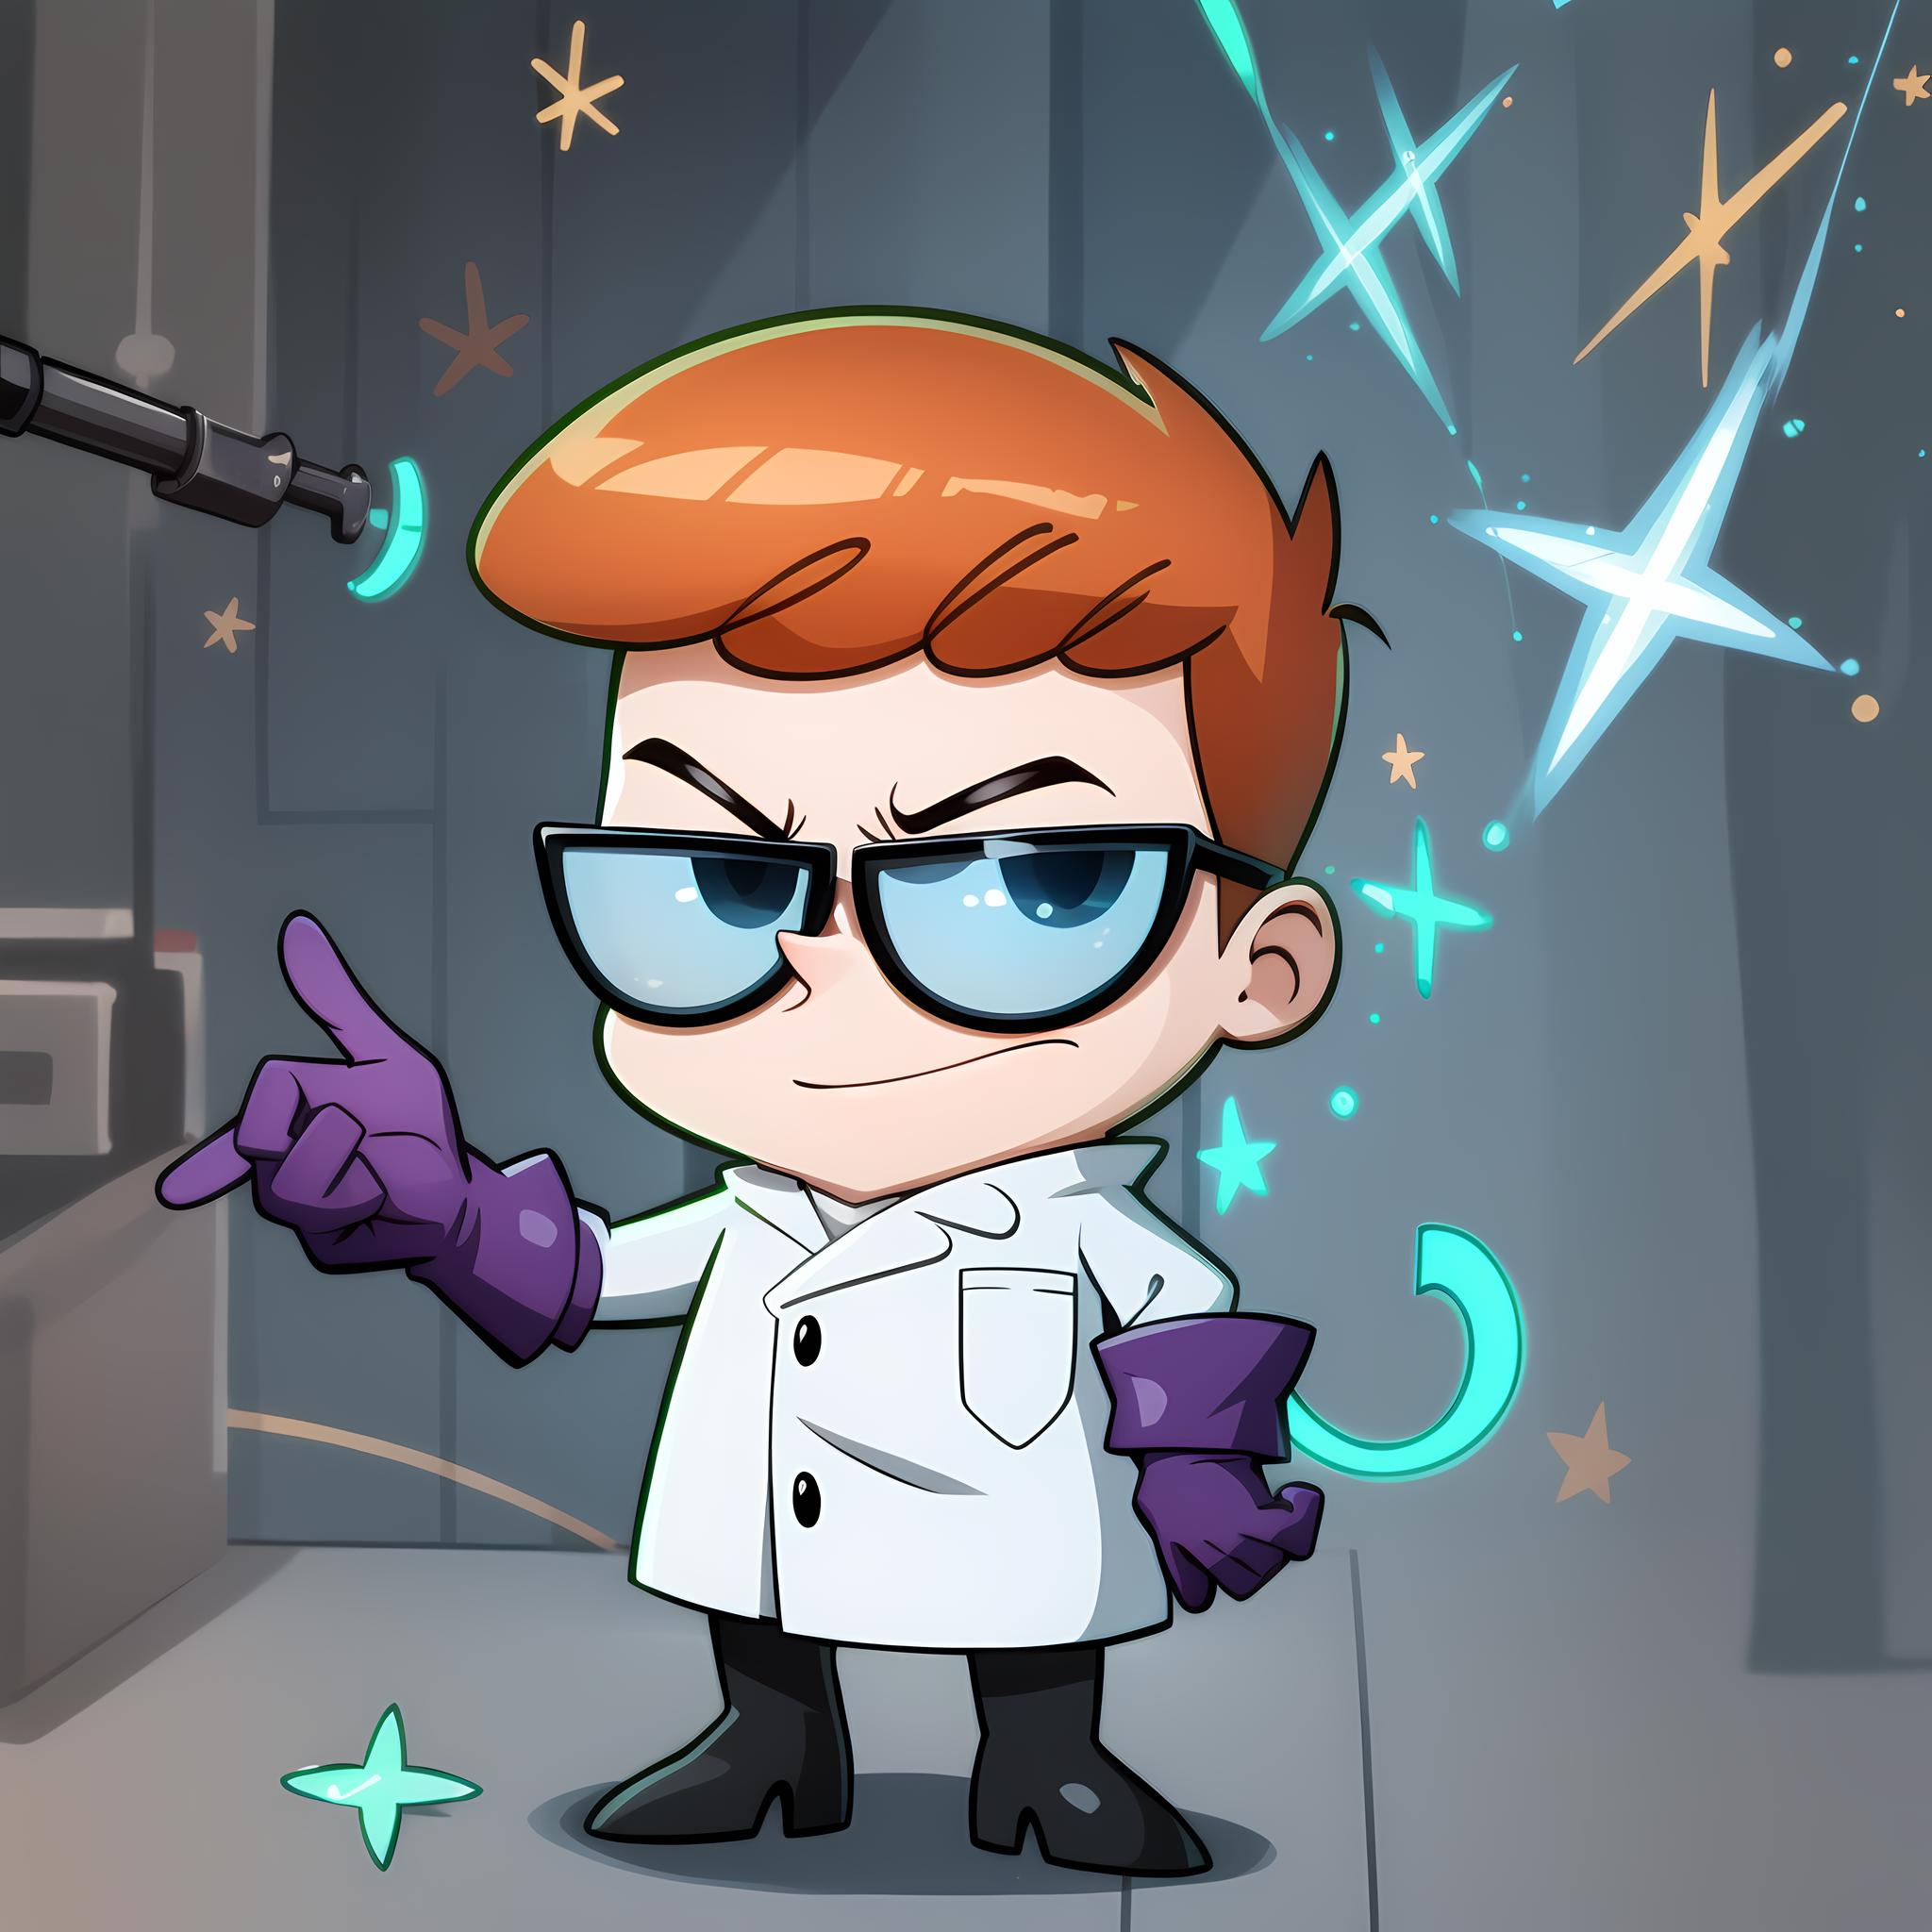 Dexter [dexter's laboratory] image by TheGooder